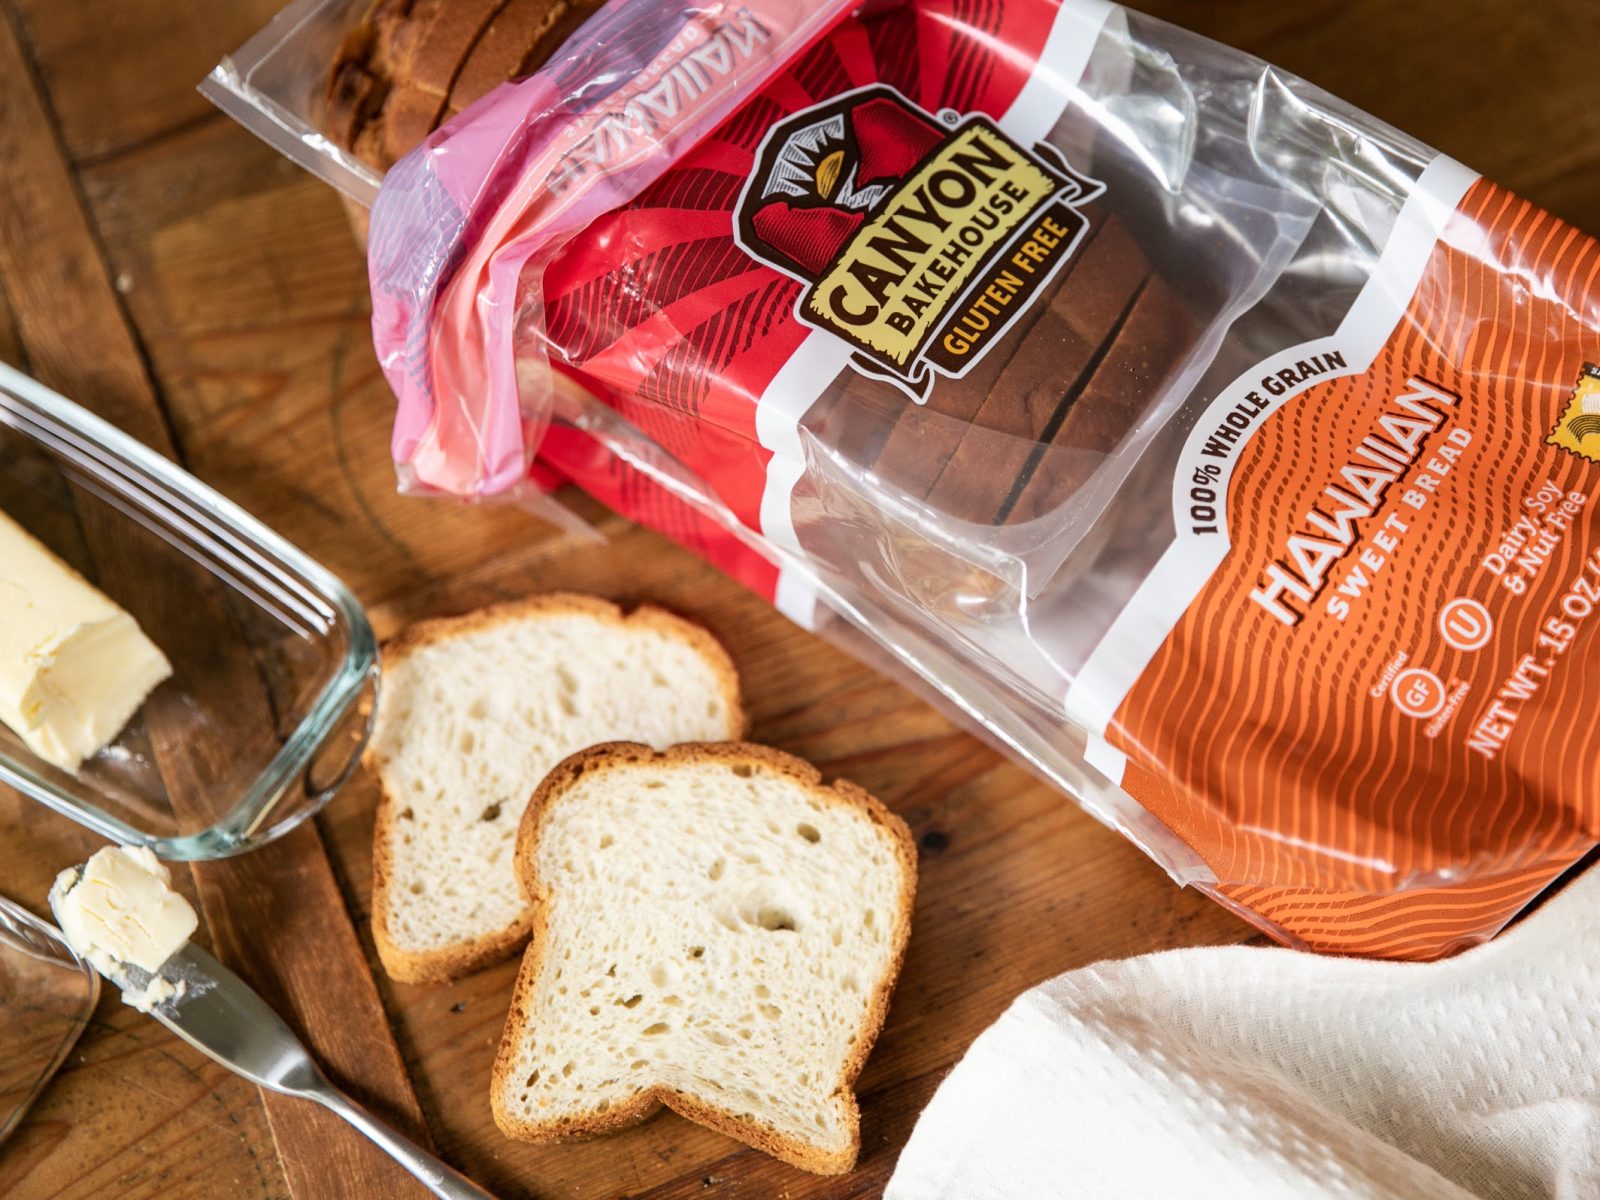 Canyon Bakehouse Bread As Low As $2.99 At Kroger (Regular Price $7.49)